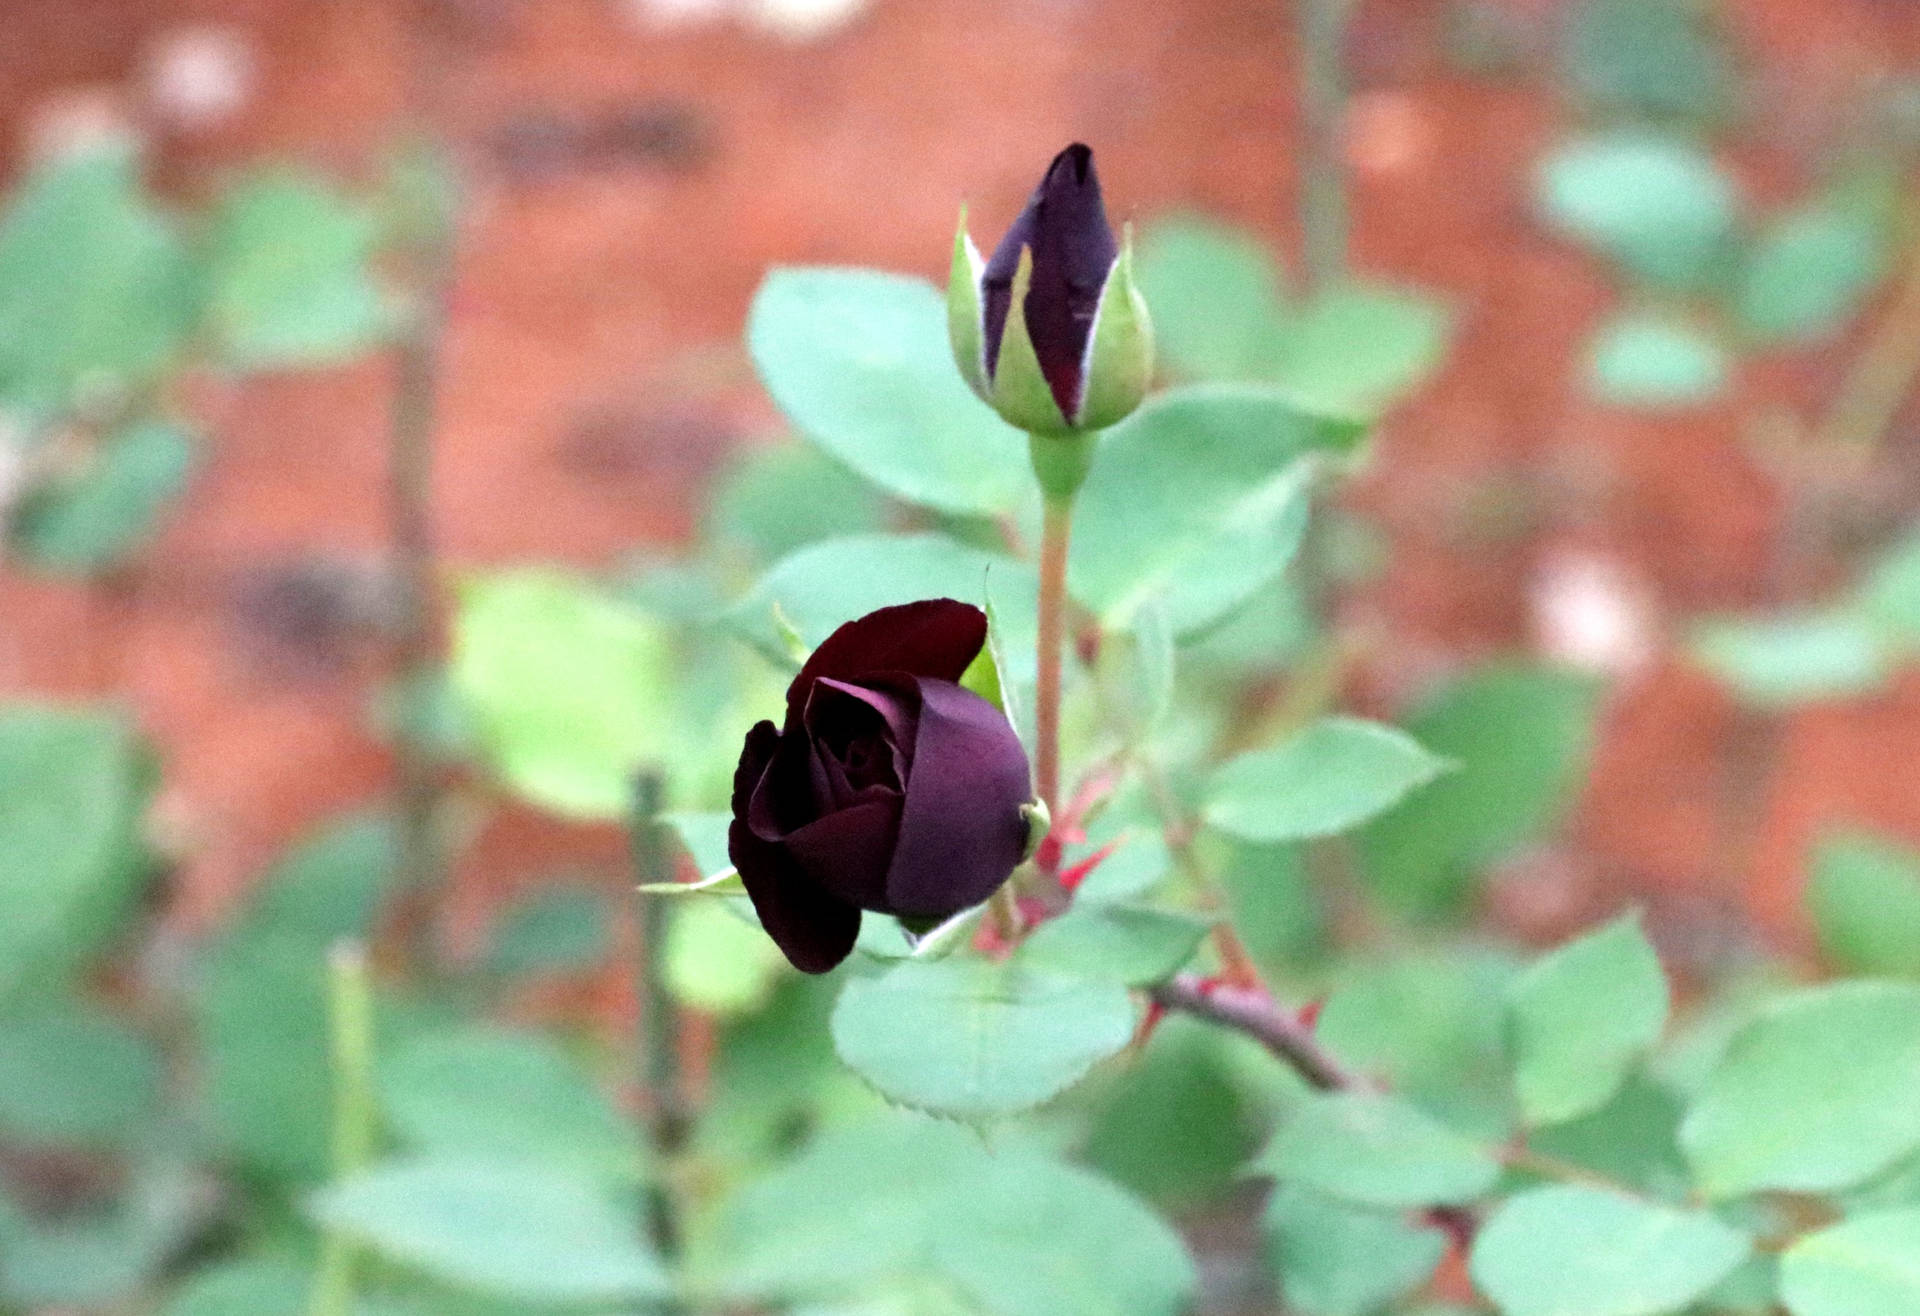 Blooming Black Rose